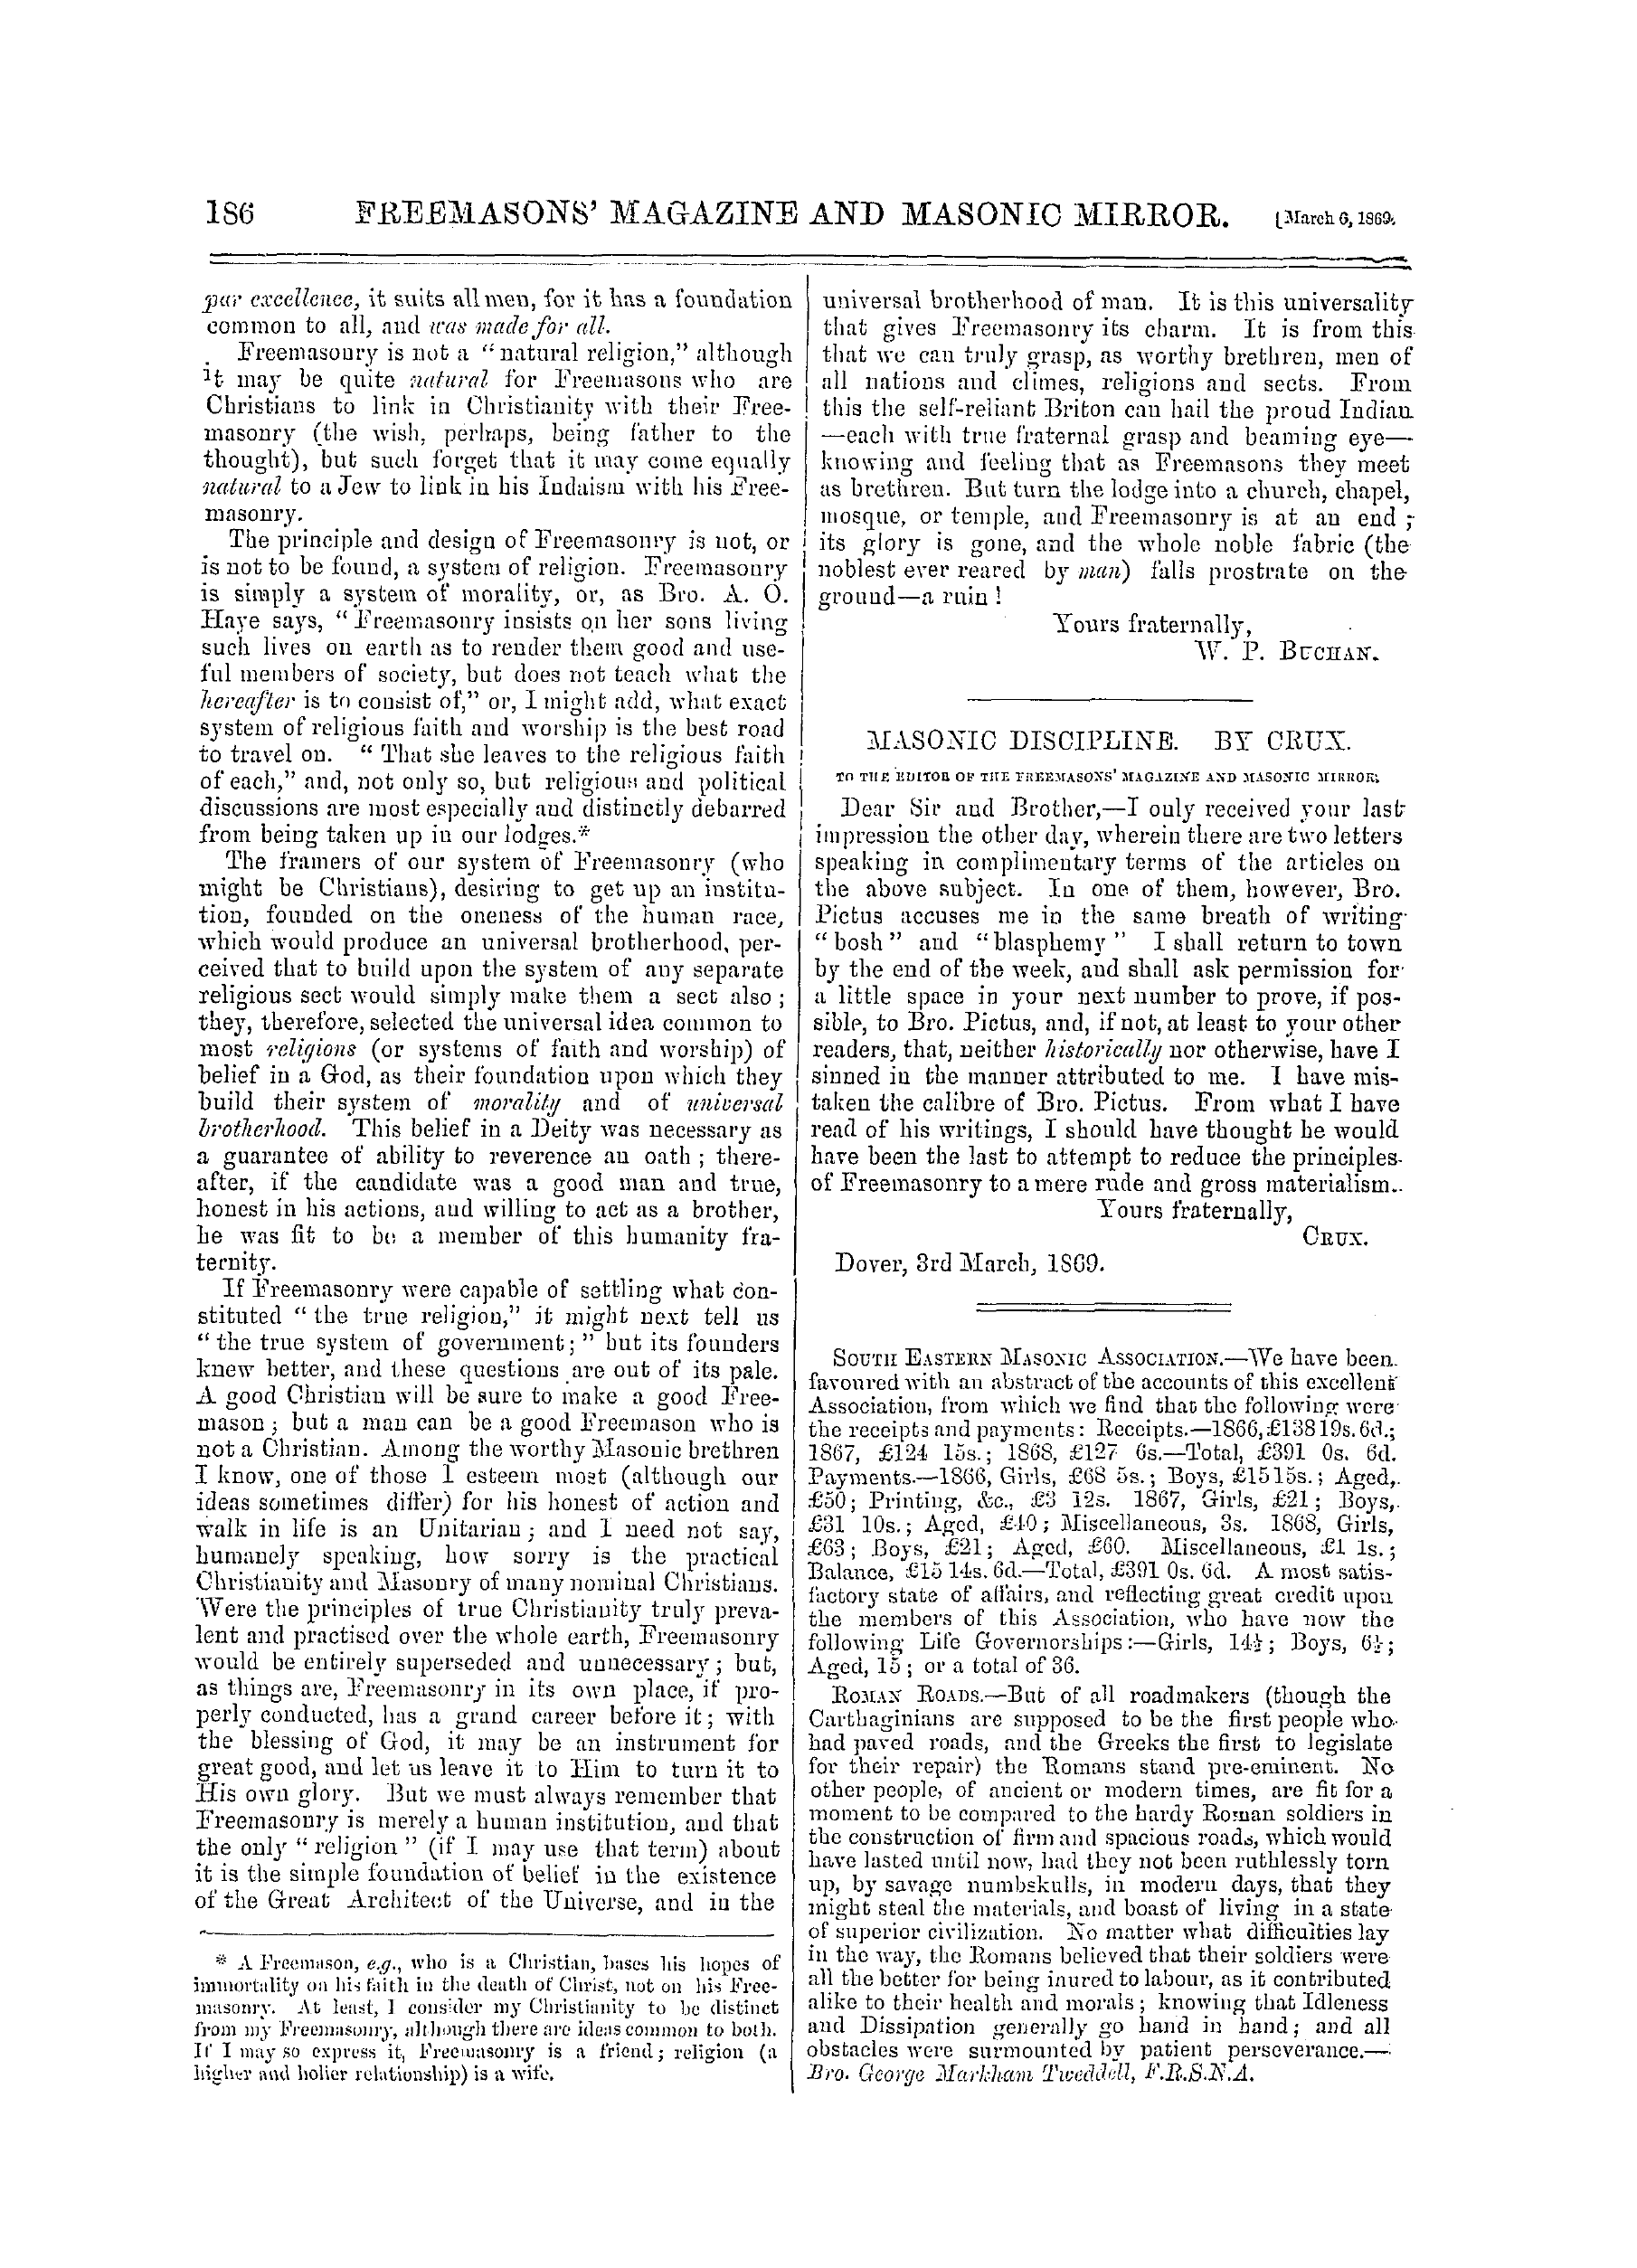 The Freemasons' Monthly Magazine: 1869-03-06 - Freemasonry Is Not A Religion.